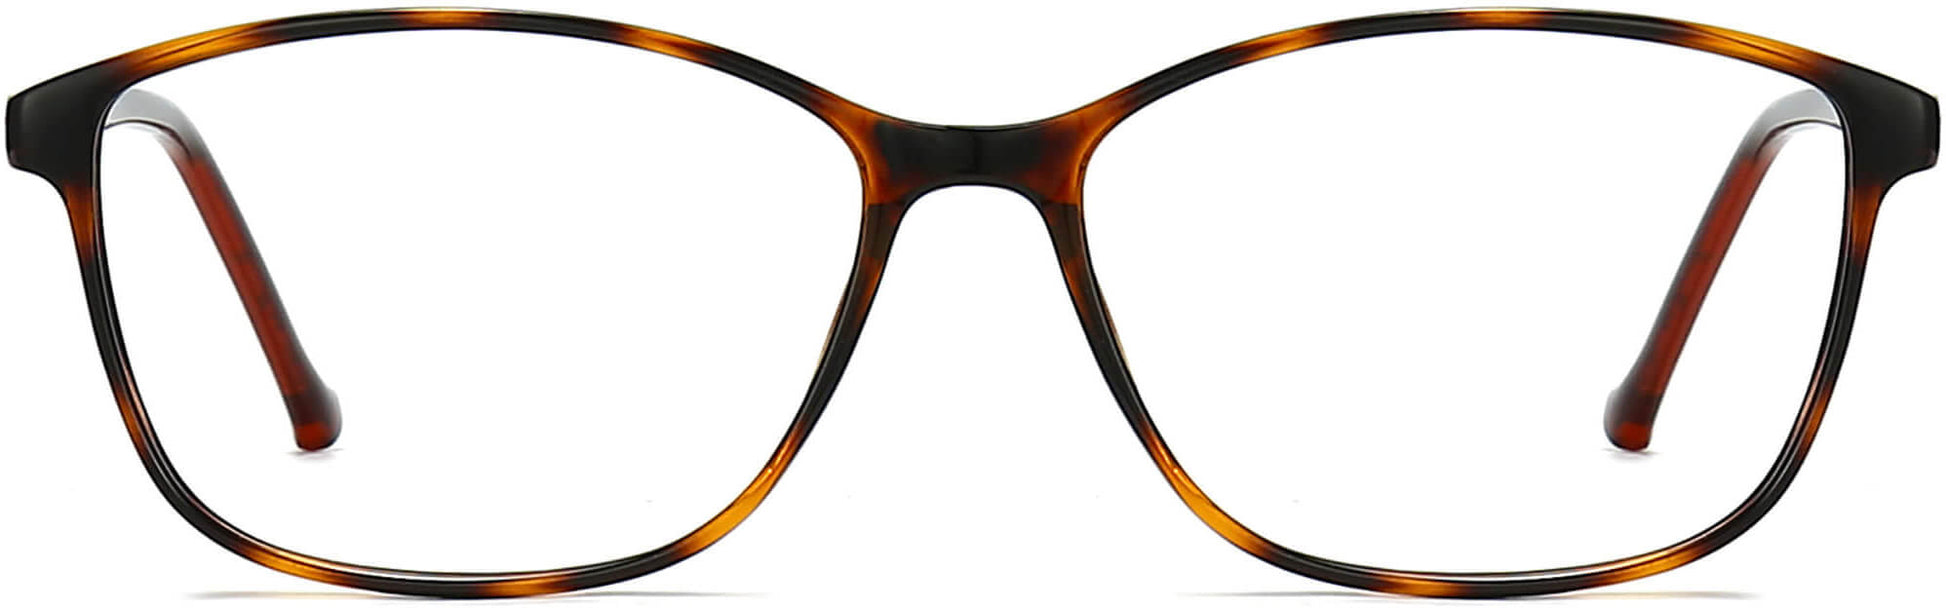 Aniyah Cateye Tortoise Eyeglasses from ANRRI, front view